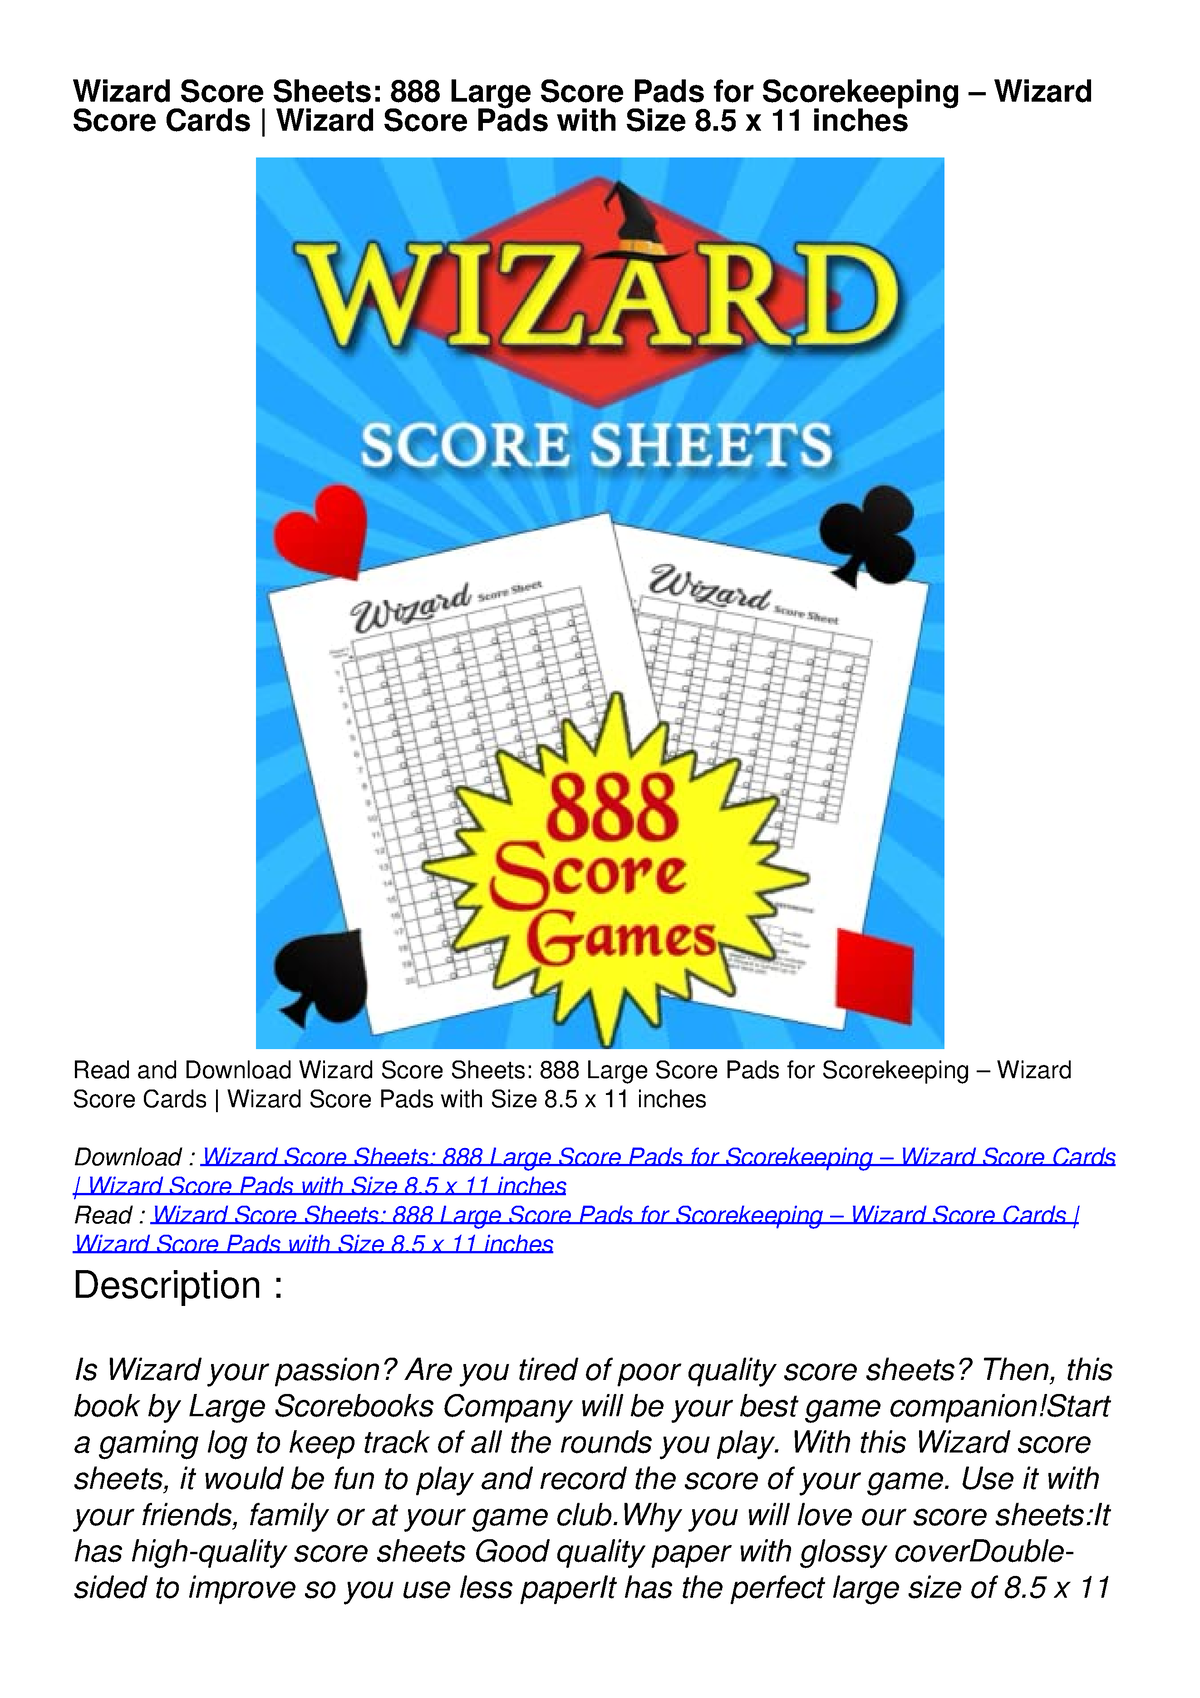 read-pdf-wizard-score-sheets-888-large-score-pads-for-scorekeeping